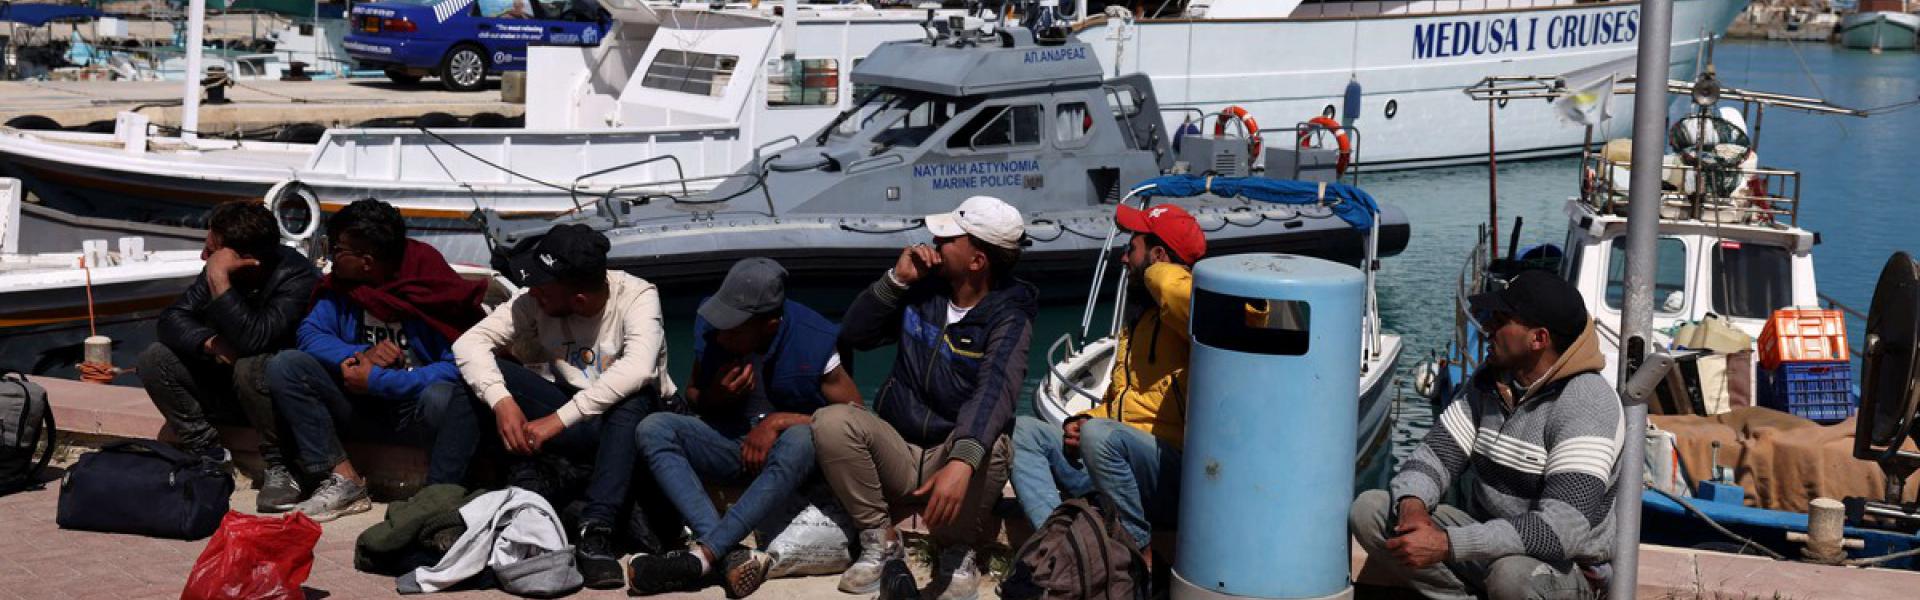 قبرص تواجه تدفقا متزايدا للمهاجرين السوريين